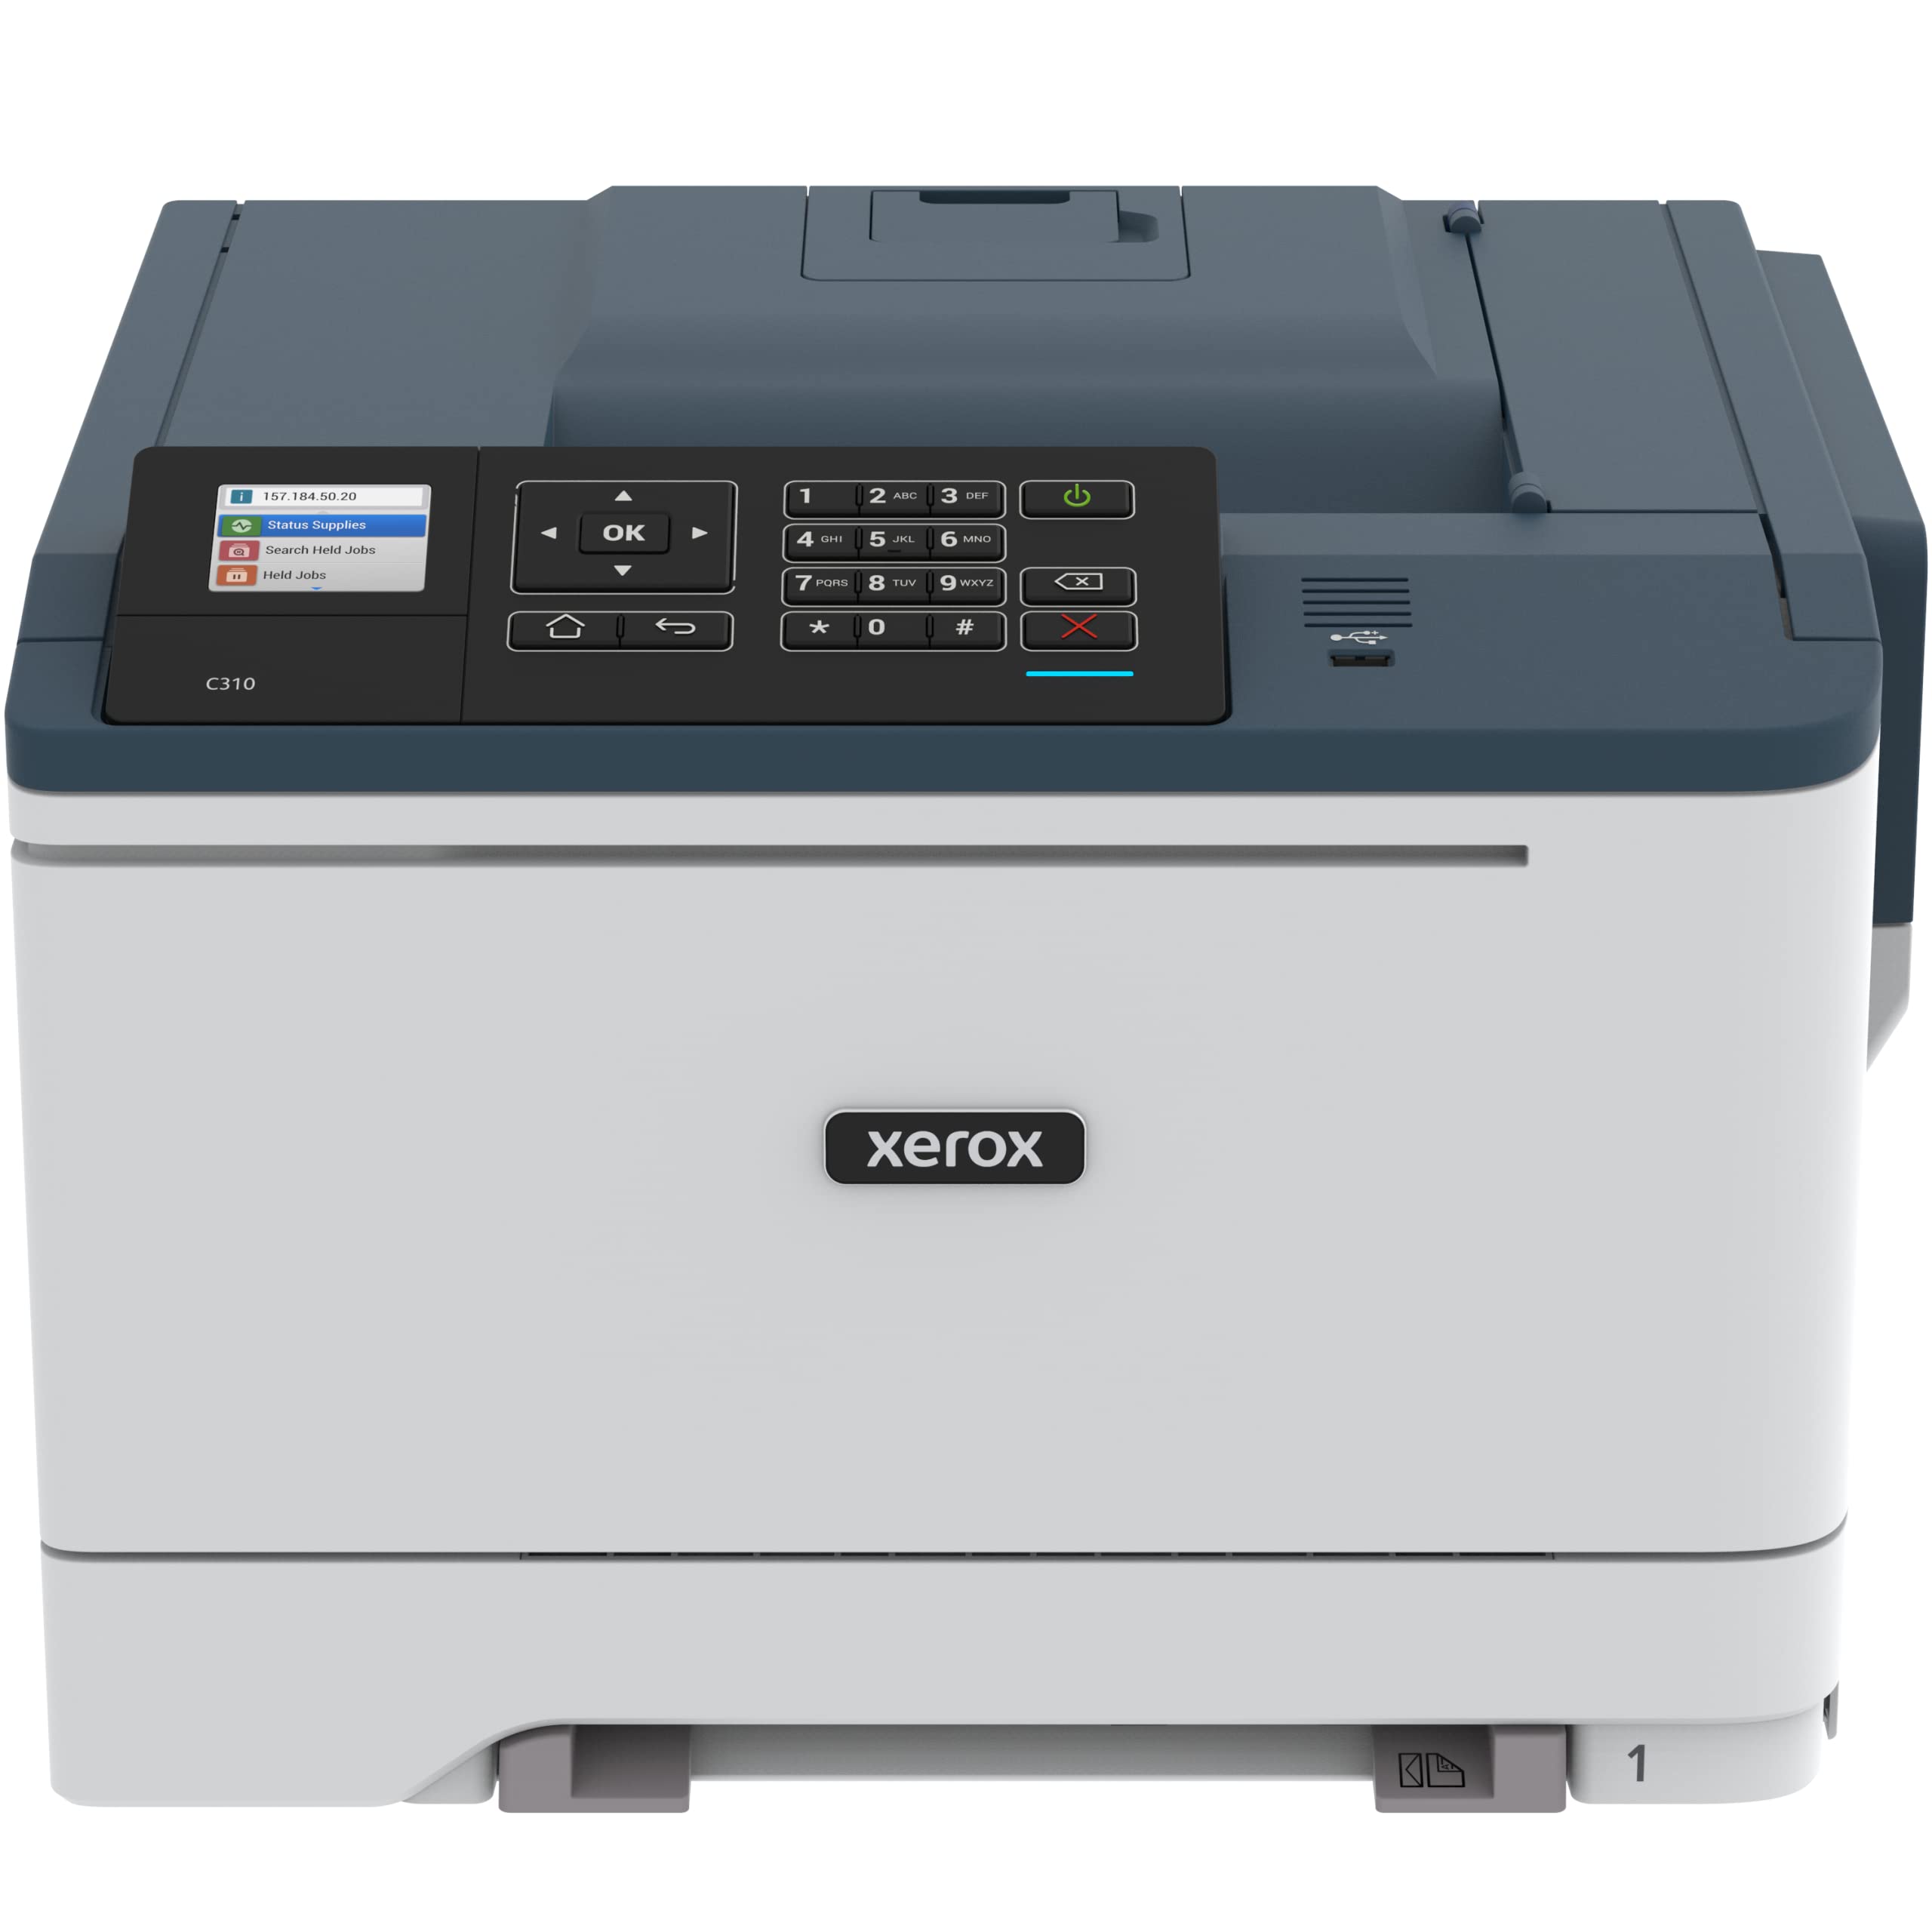 Xerox Bezprzewodowa kolorowa drukarka laserowa C310/DNI